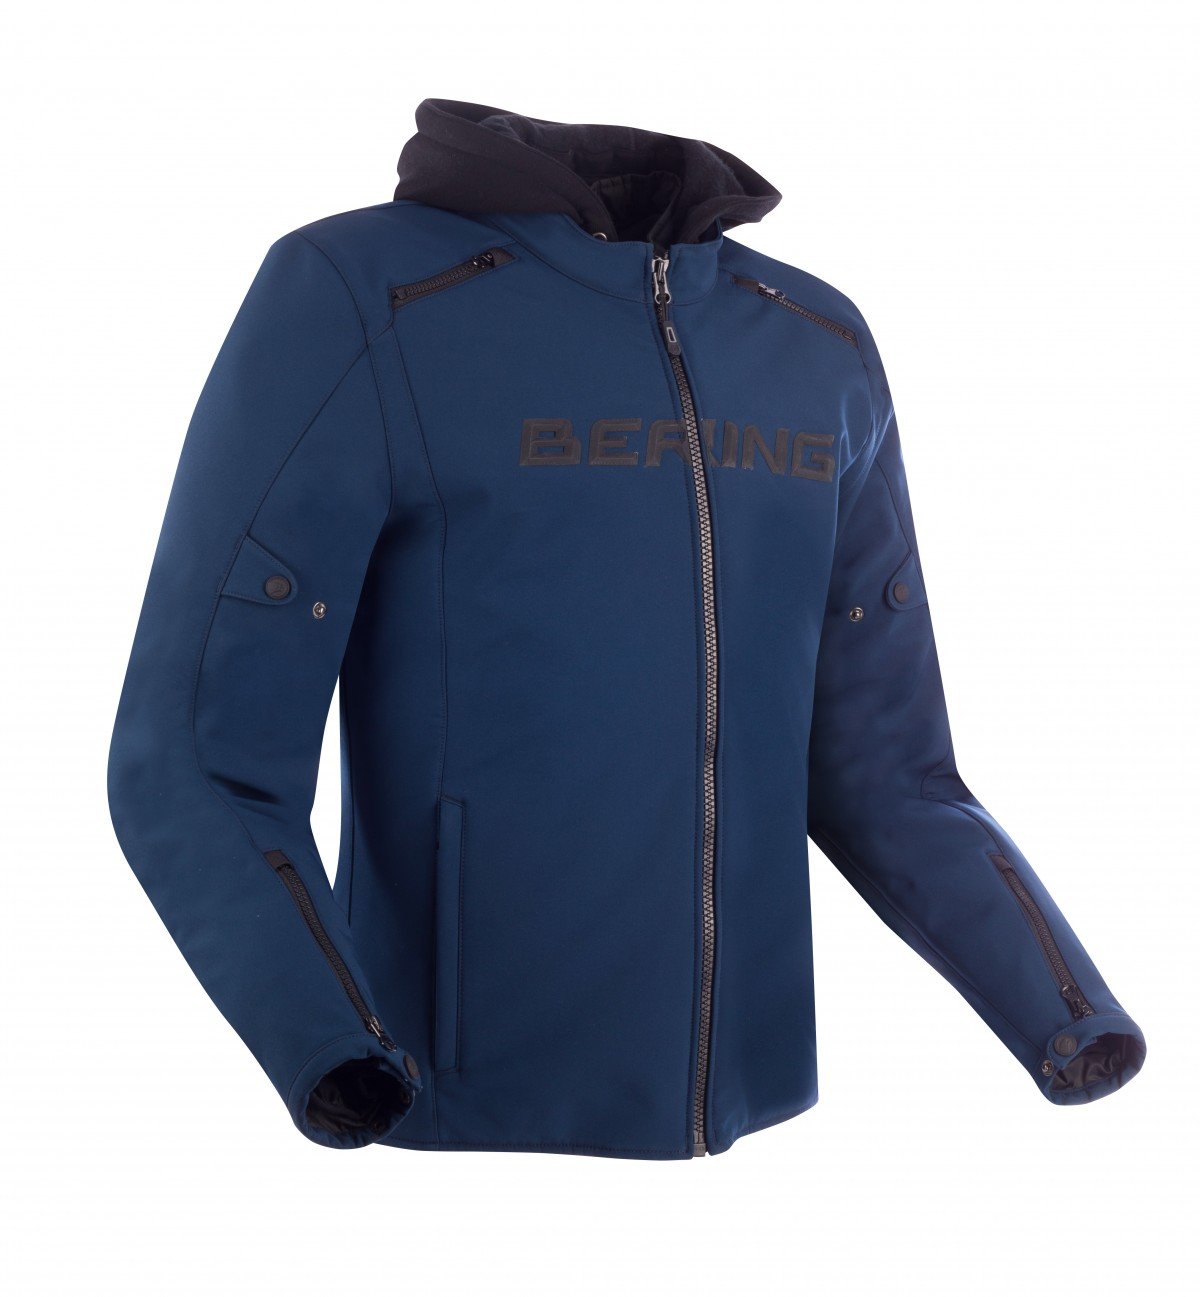 Image of Bering Elite Jacket Navy Blue Size XL EN